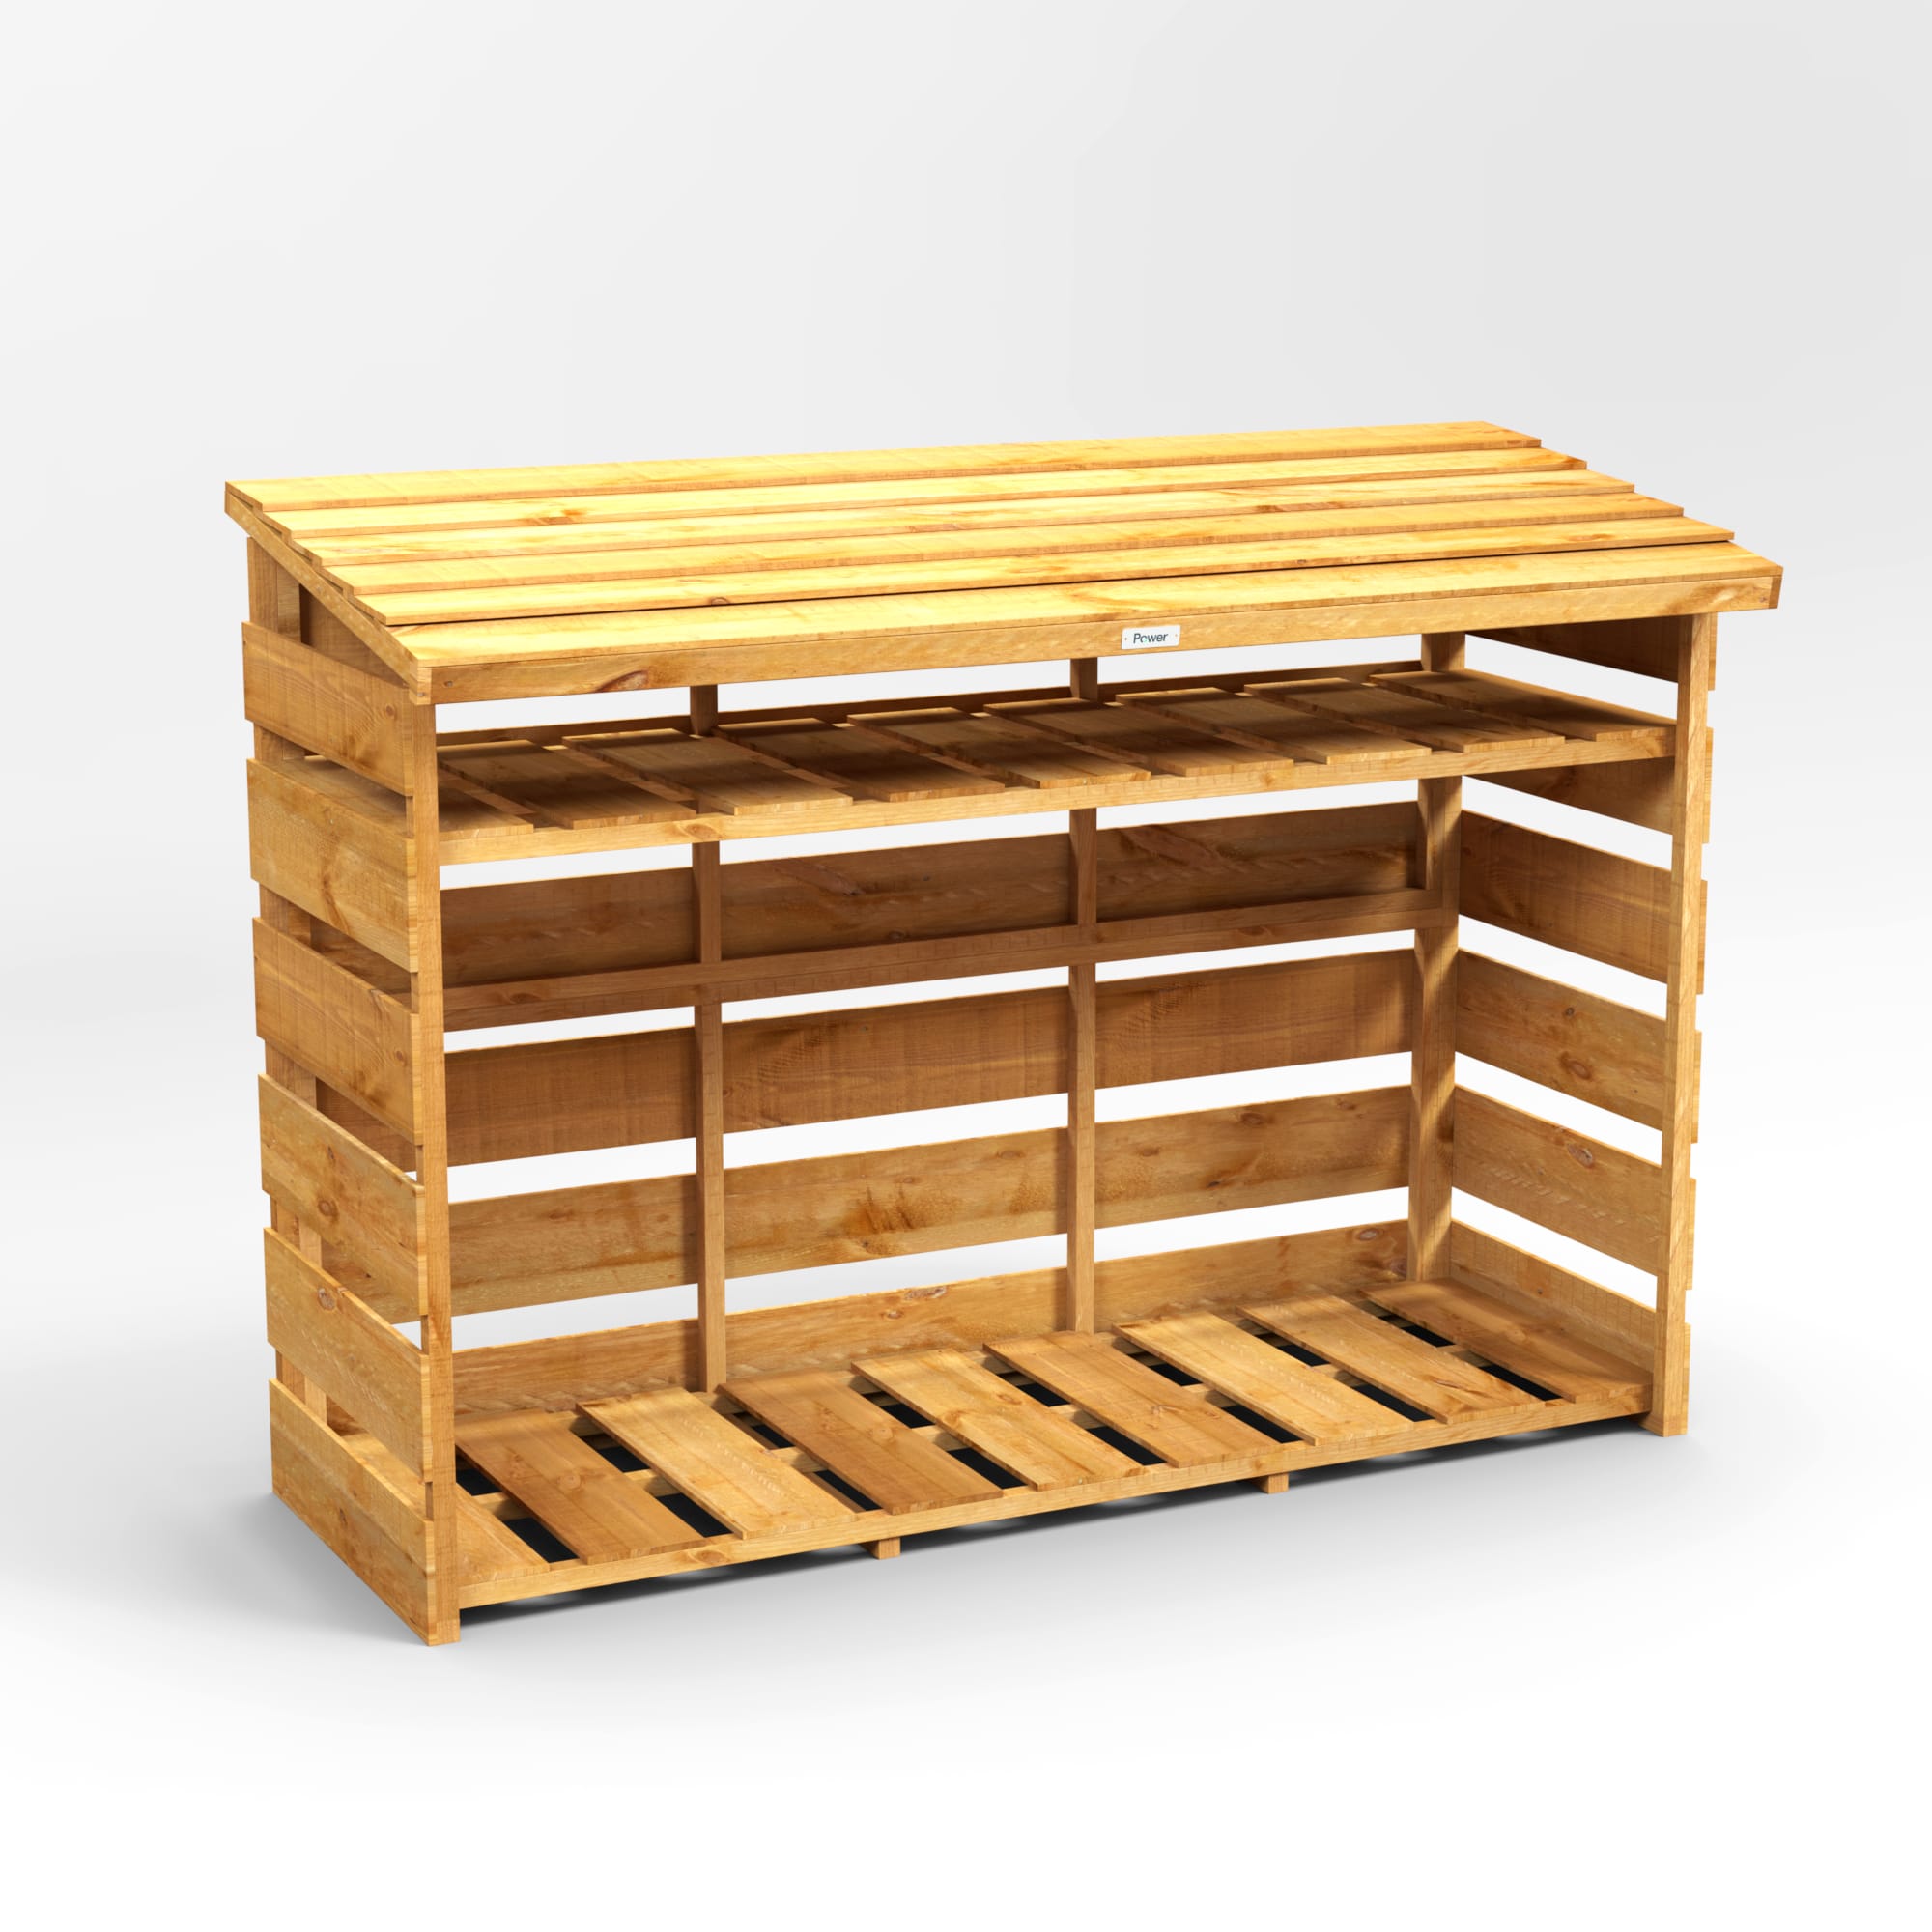 6×2 Log Store With Kindling Shelf